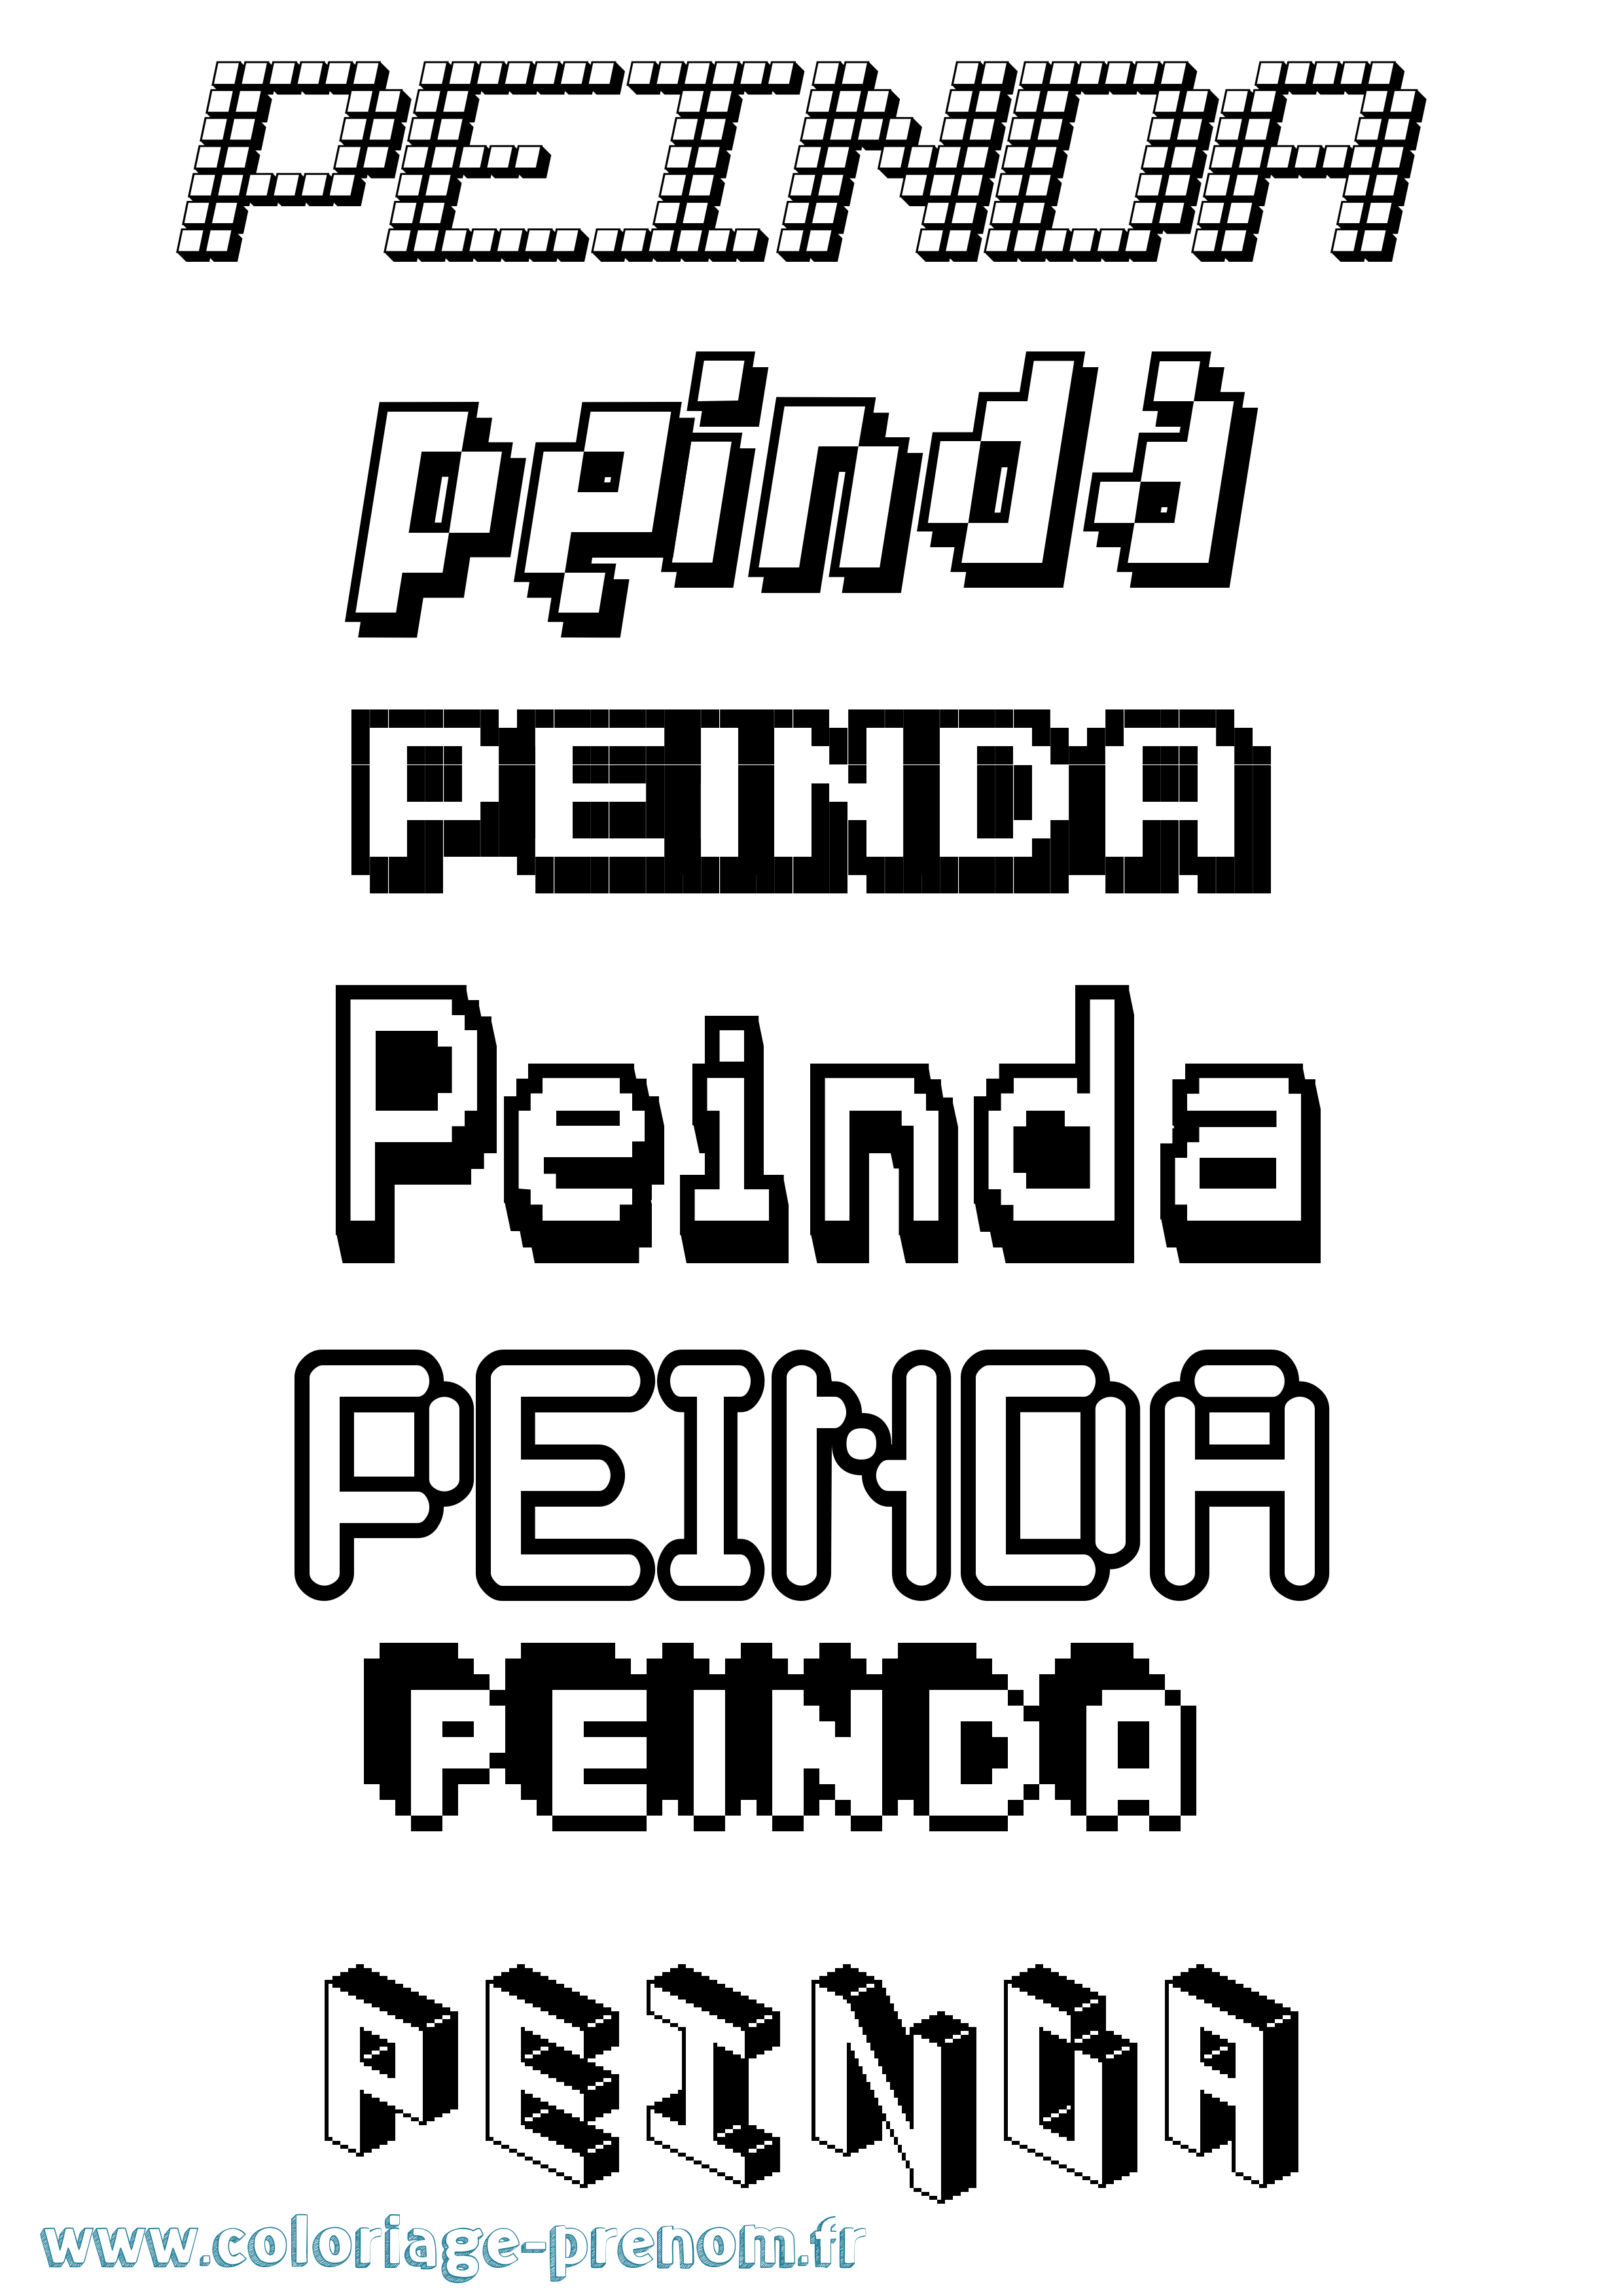 Coloriage prénom Peinda Pixel